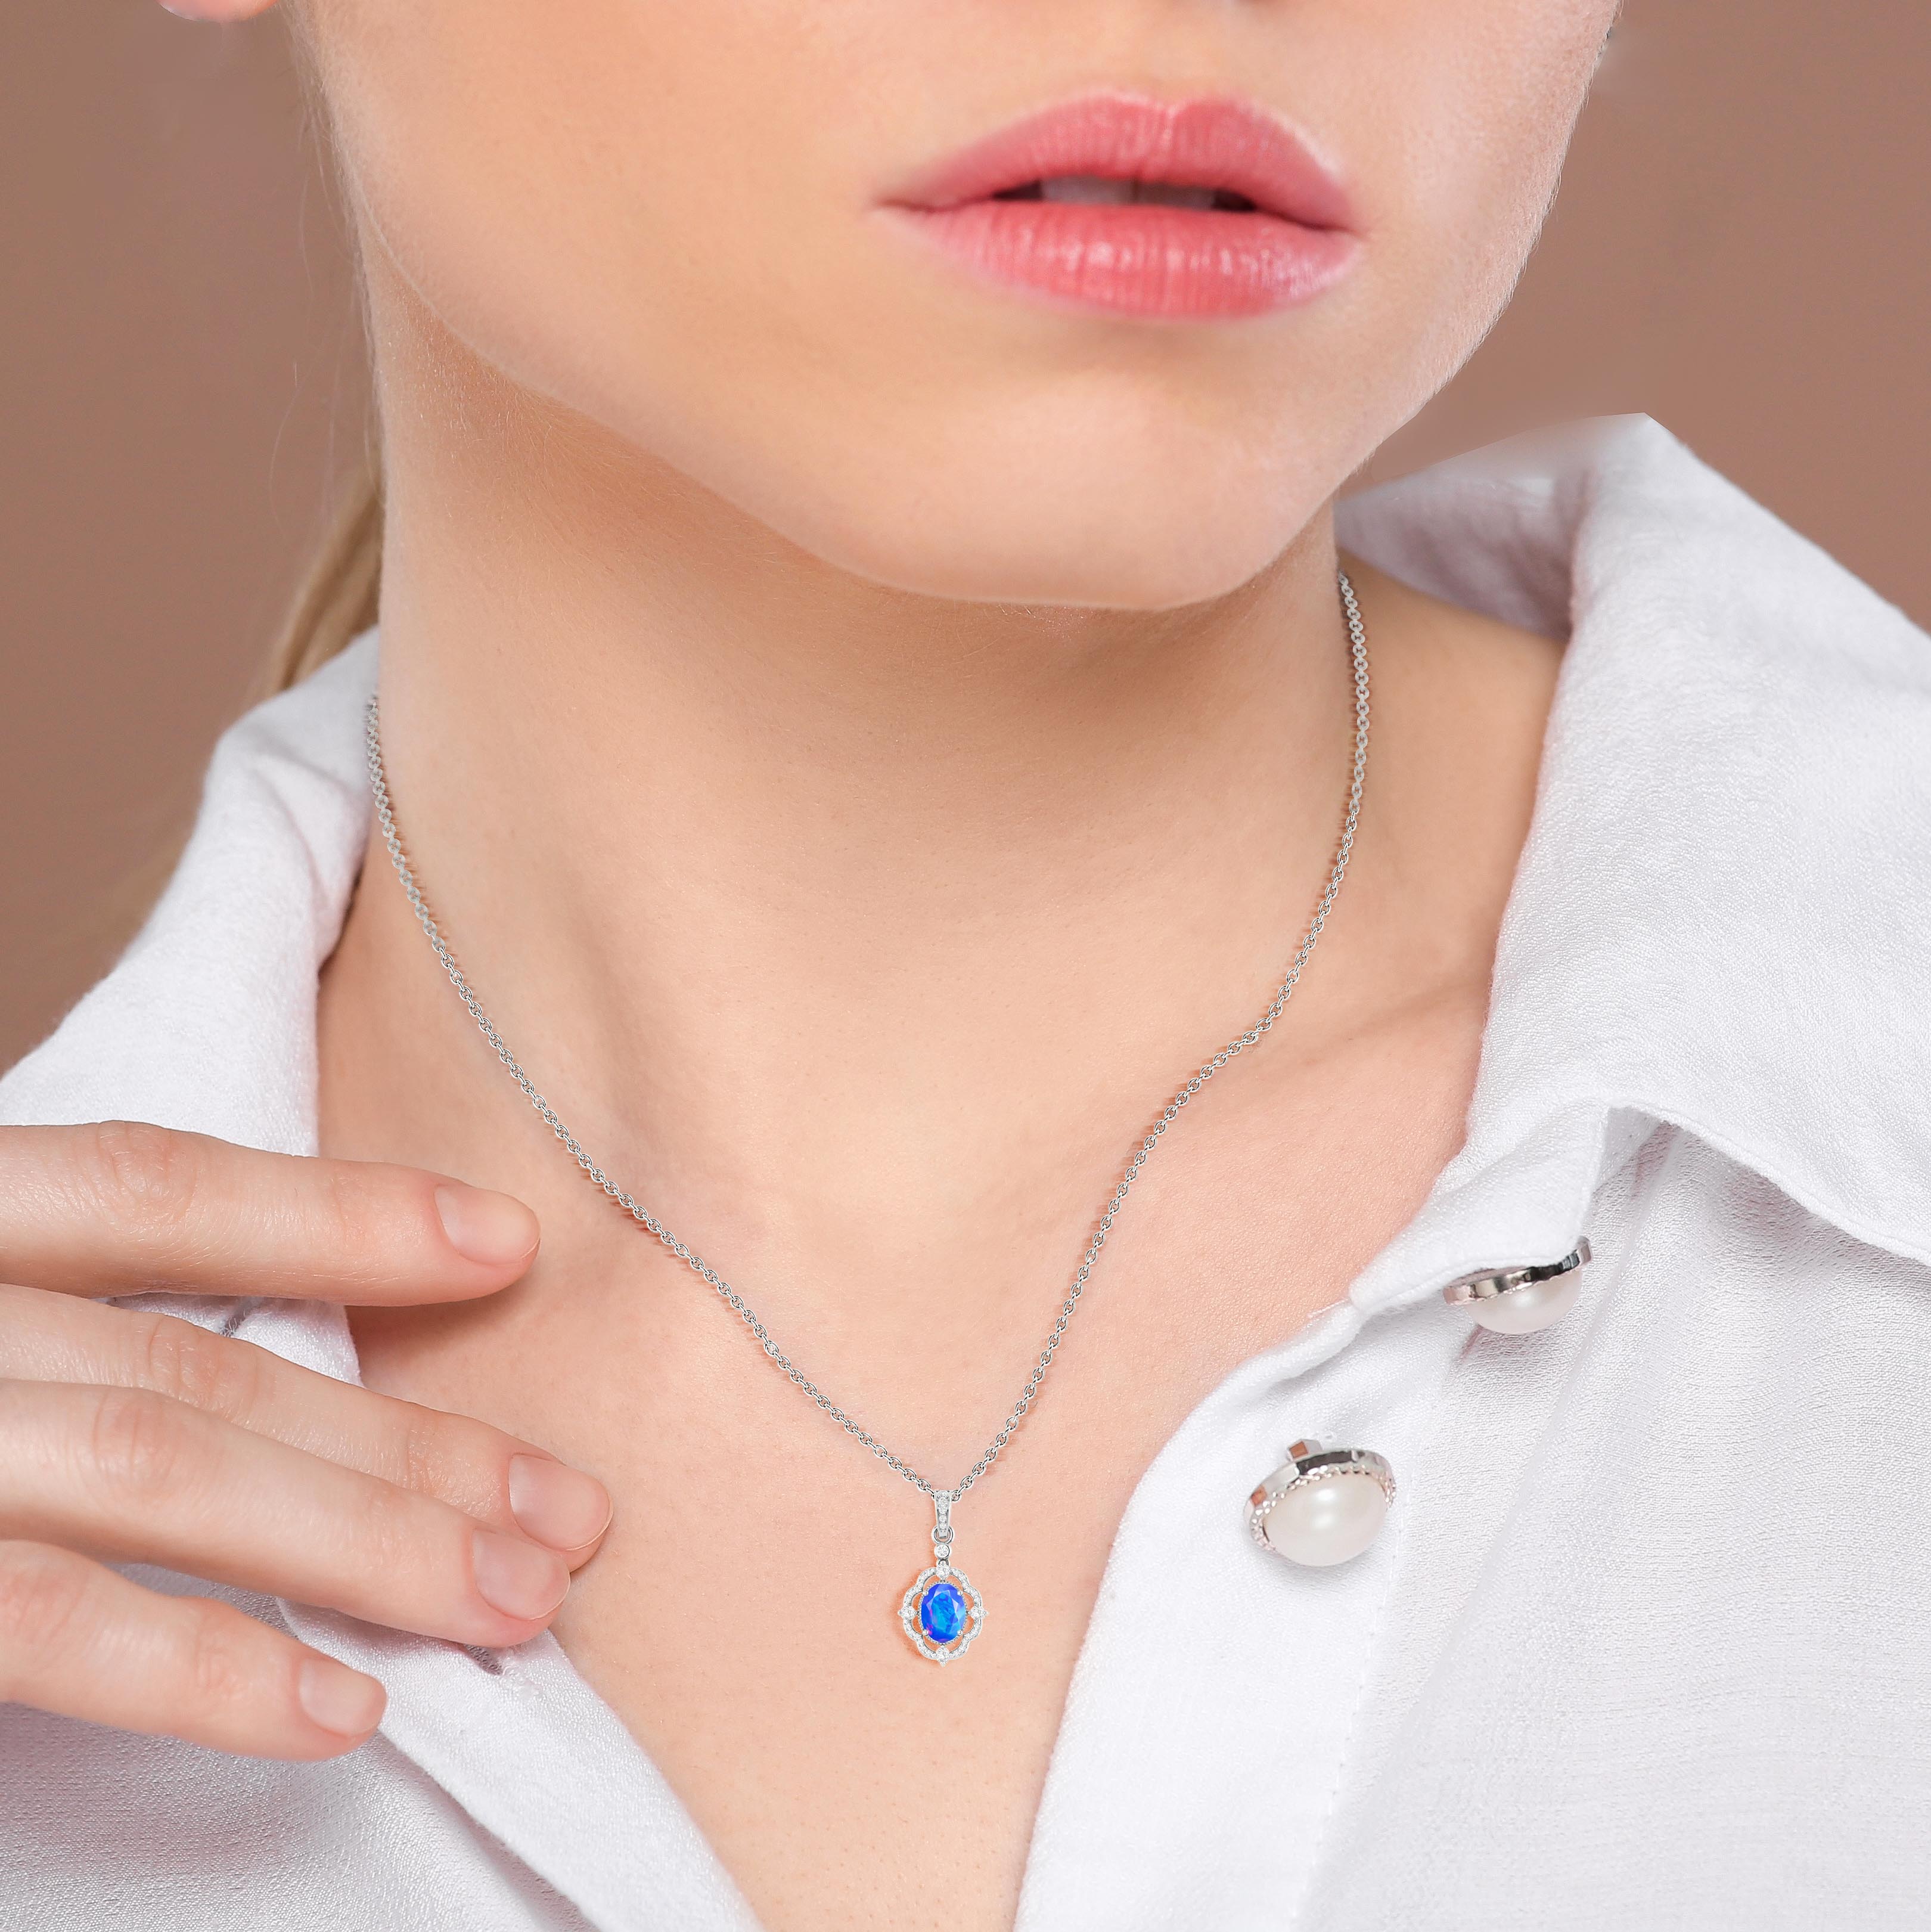 Blue Opal Gemstone Charm Pendant